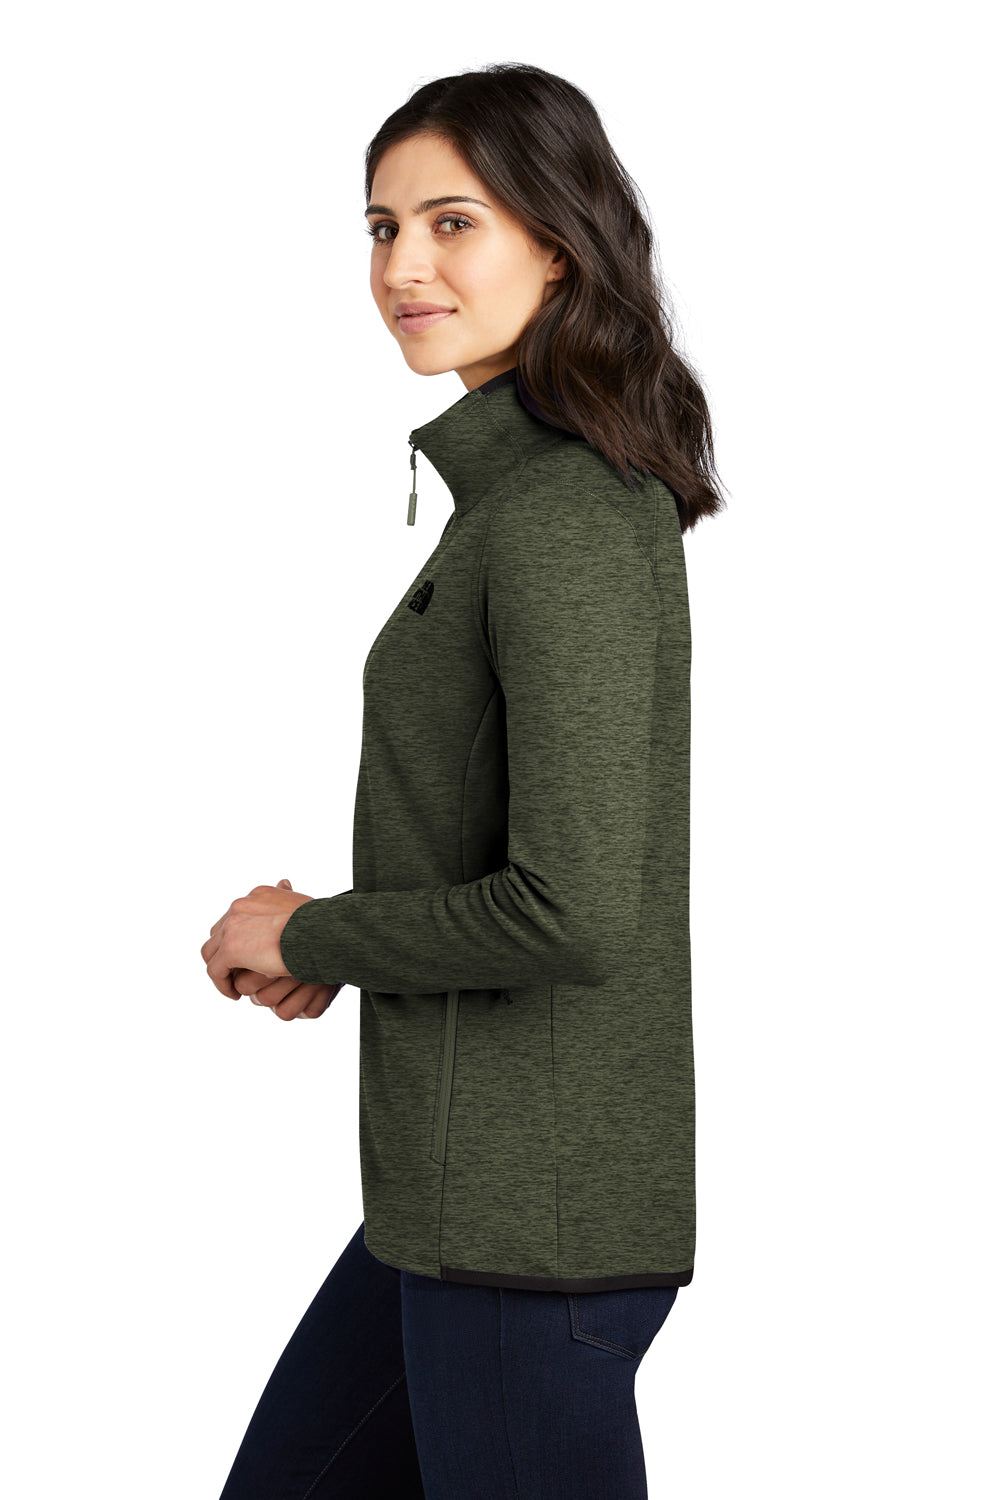 The North Face Womens Skyline Fleece Full Zip Jacket Heather Four Leaf Clover Green Side